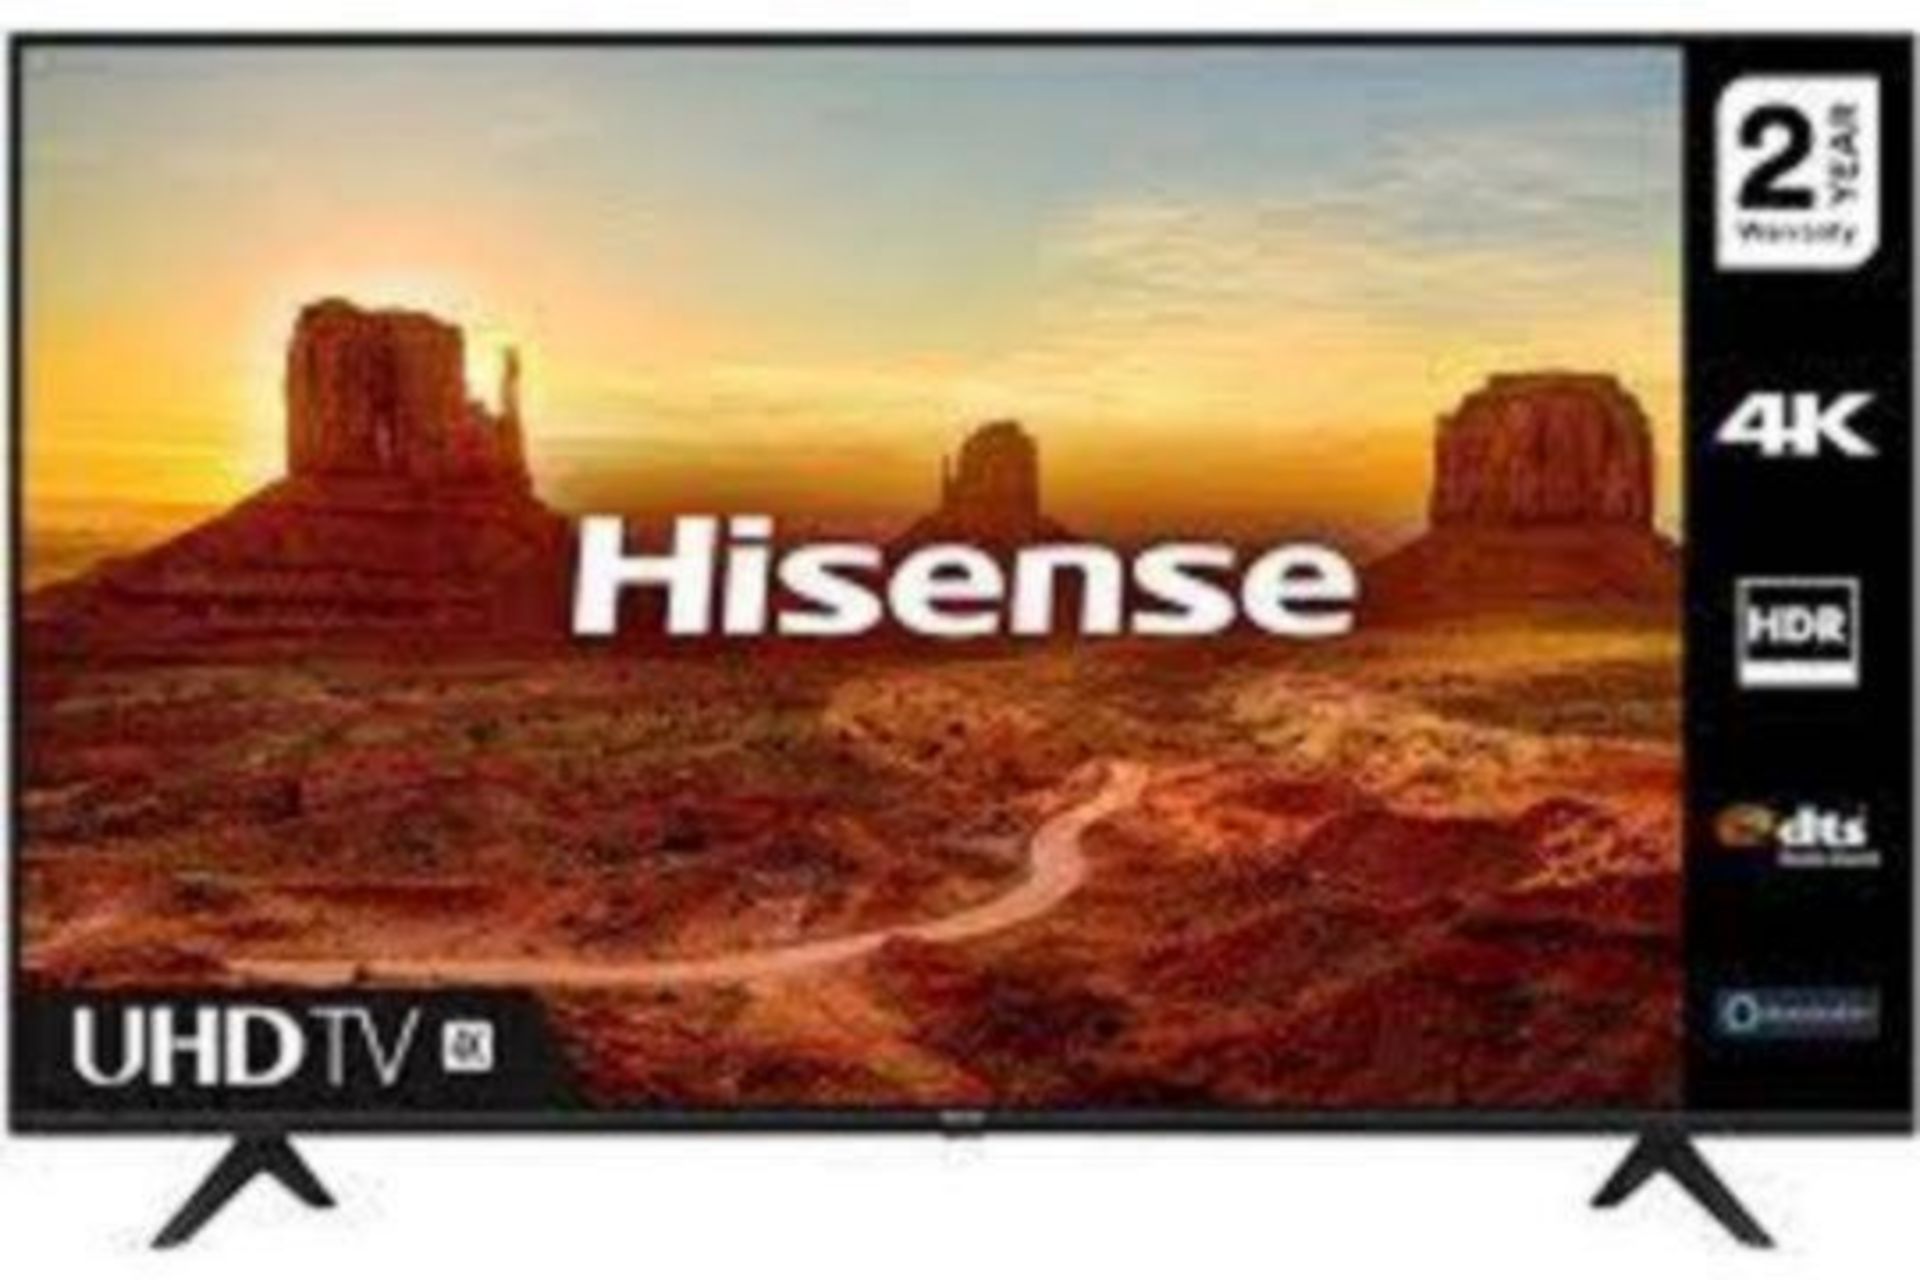 BRAND NEW HISENSE 55 INCH UHD SMART TV RRP £699